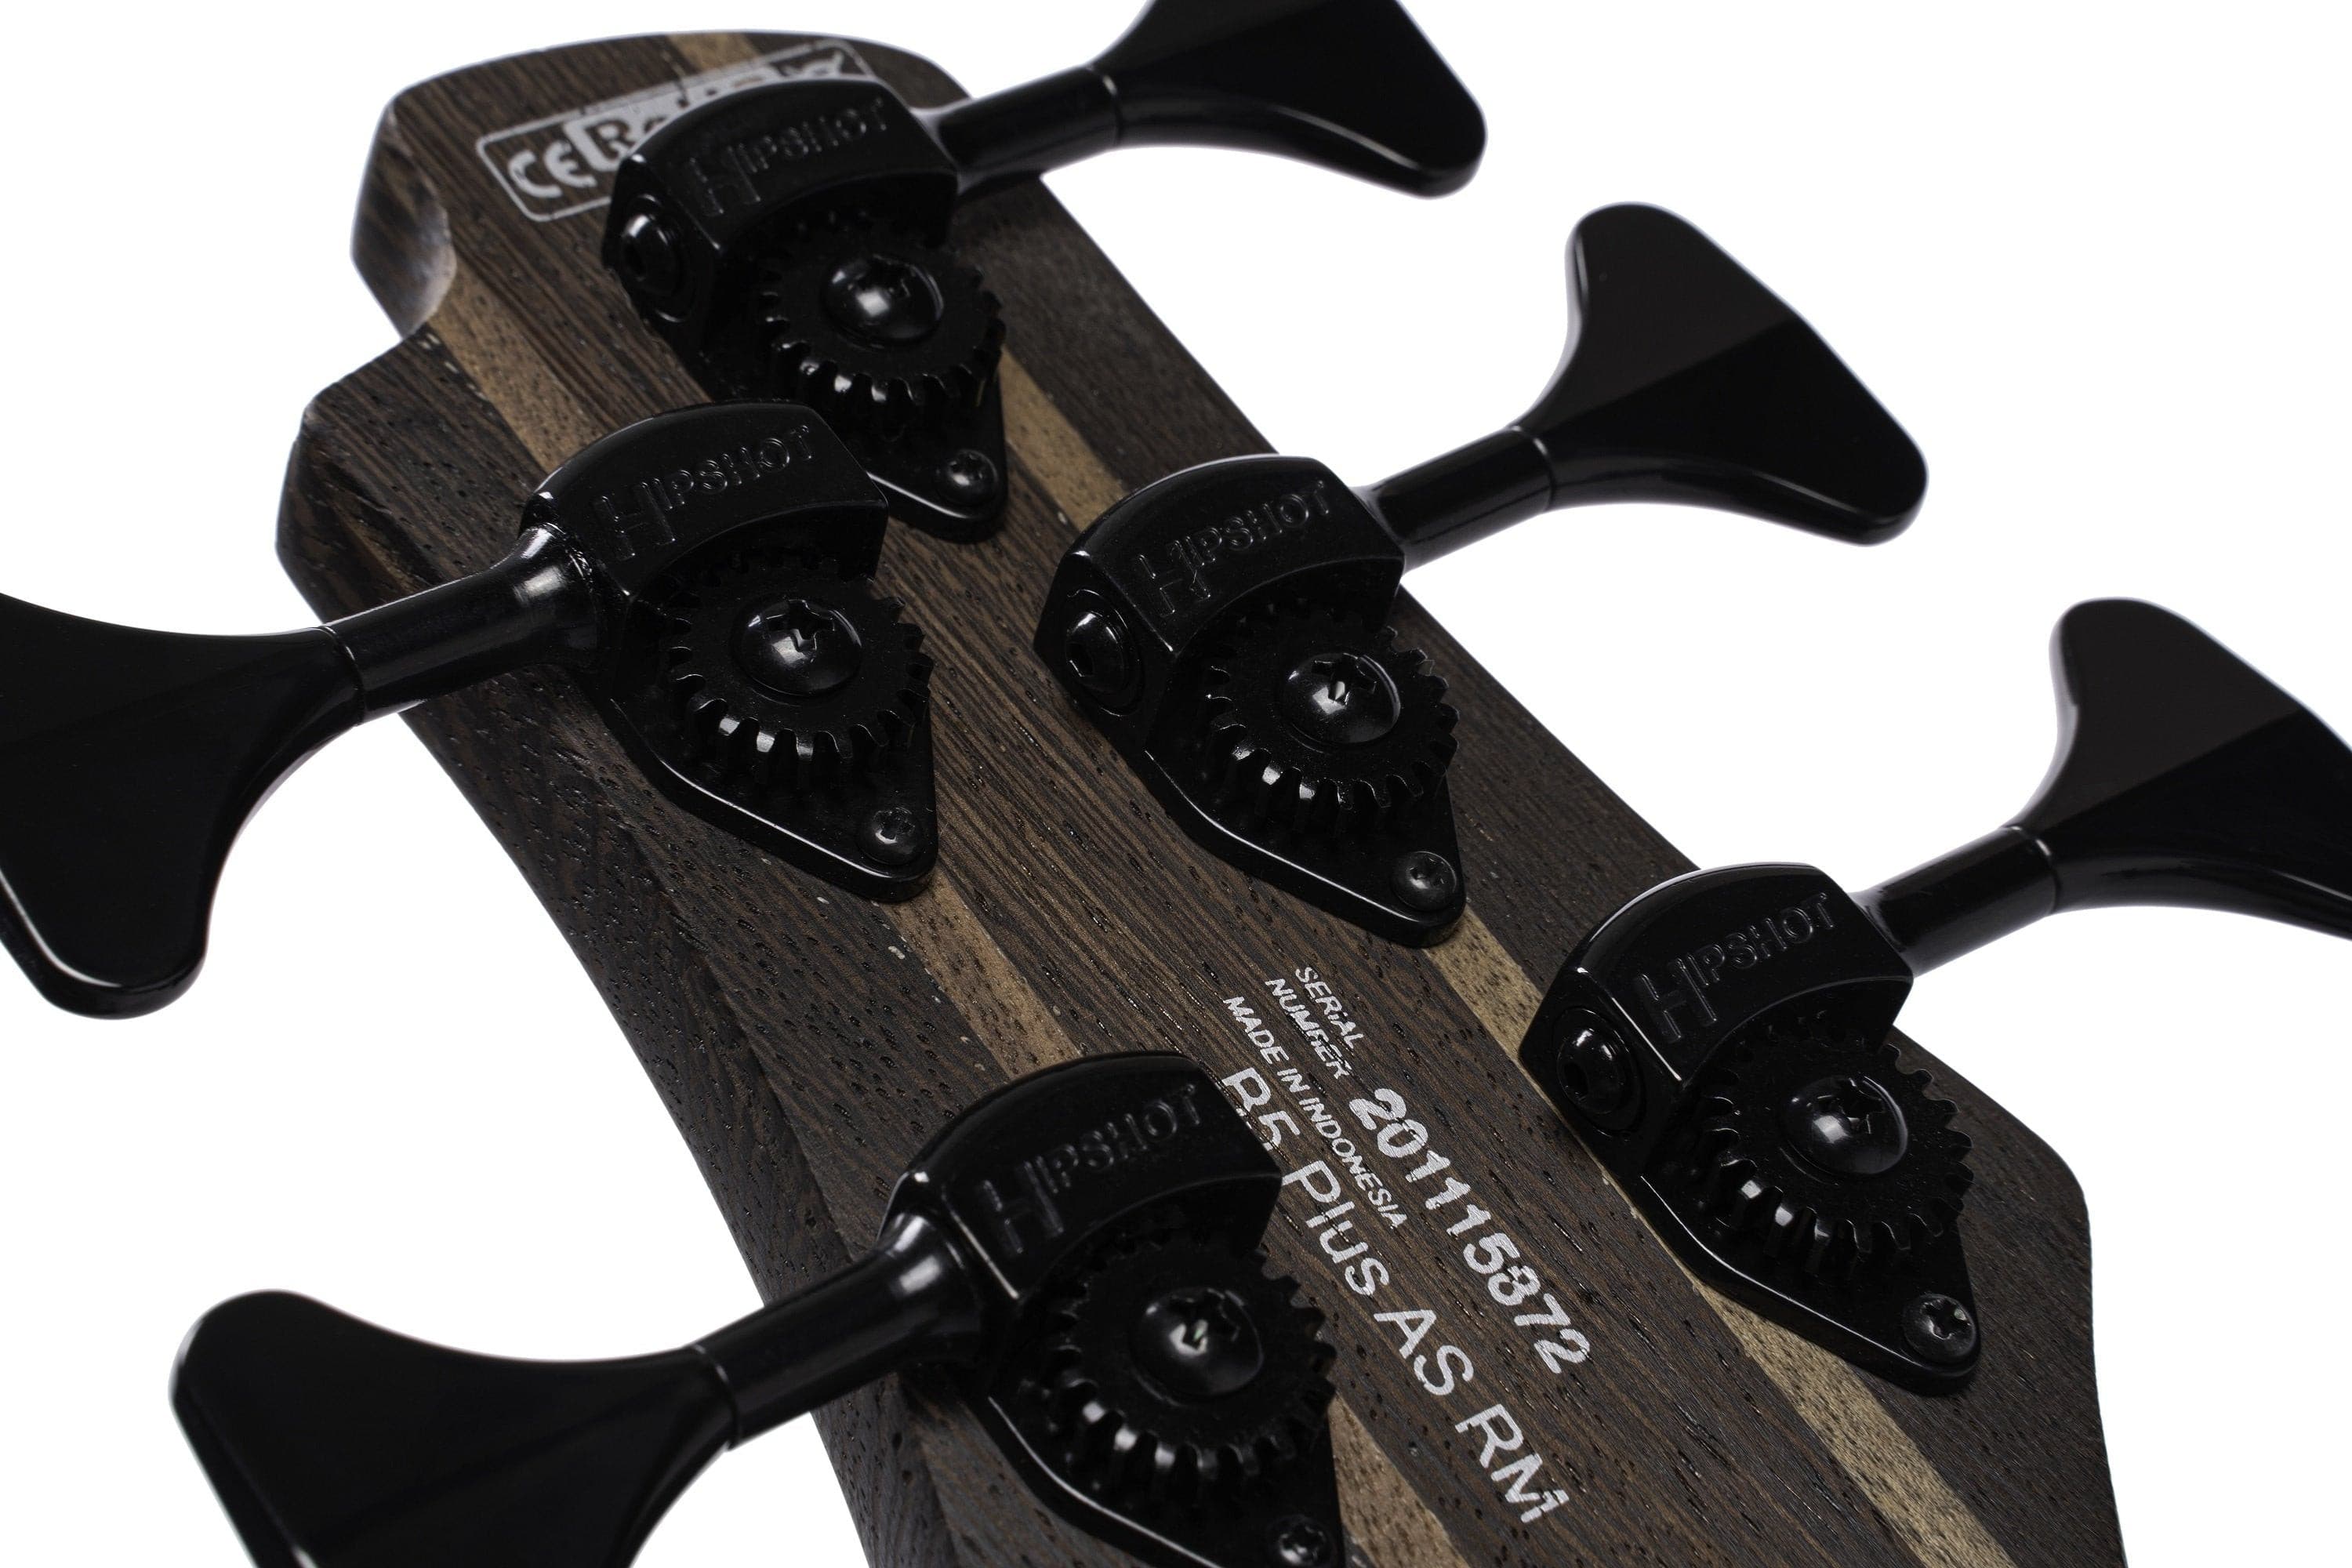 Cort B5 Element Open Pore Trans Black, Bass Guitar for sale at Richards Guitars.